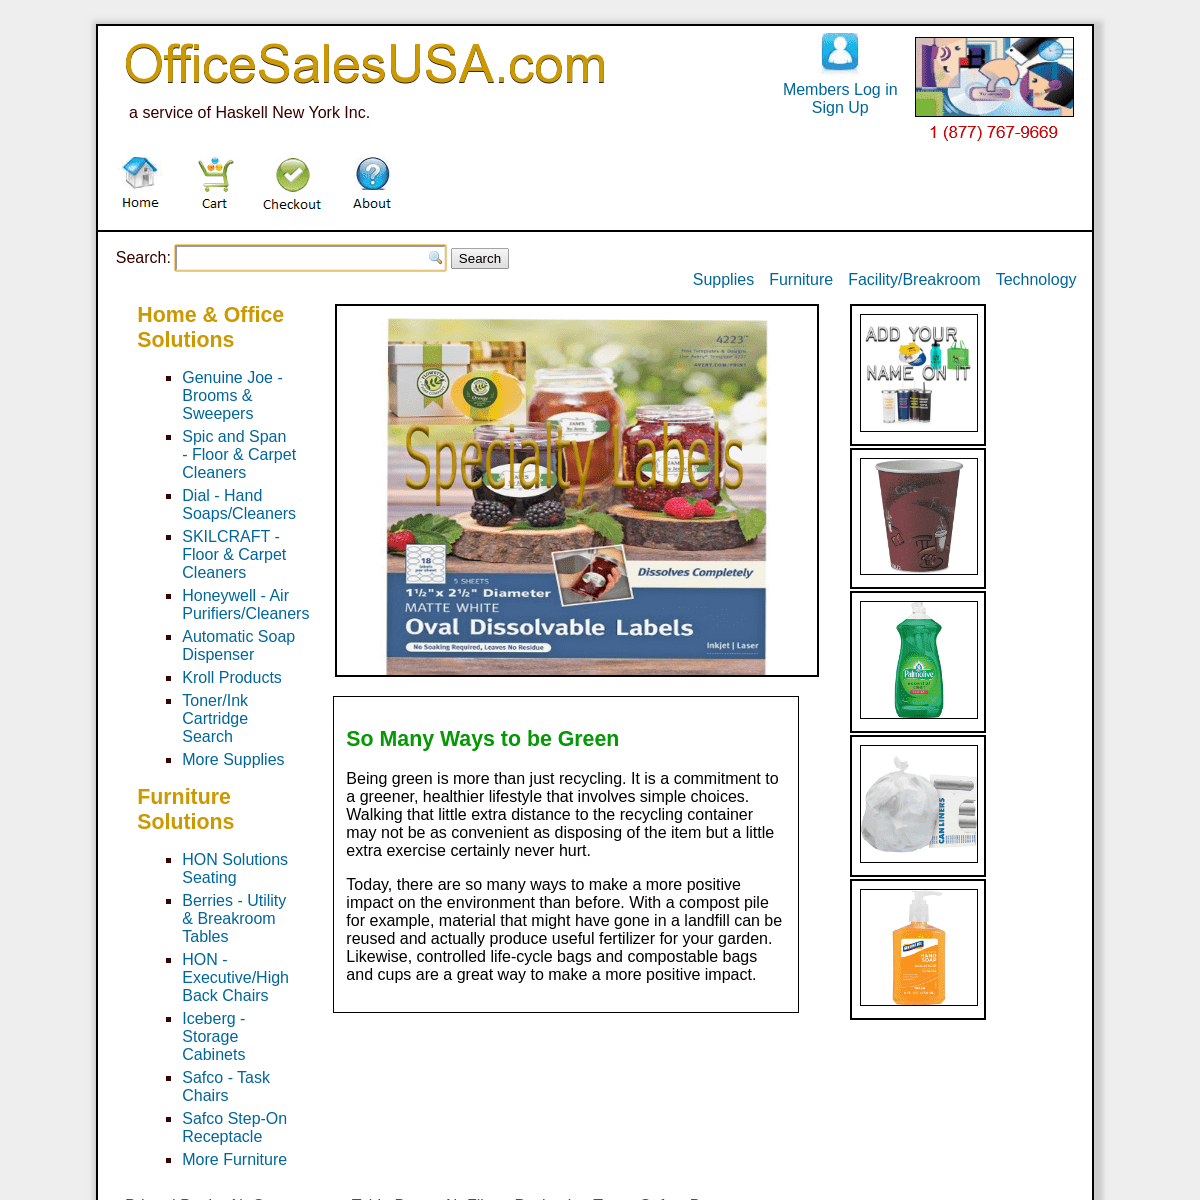 A complete backup of officesalesusa.com